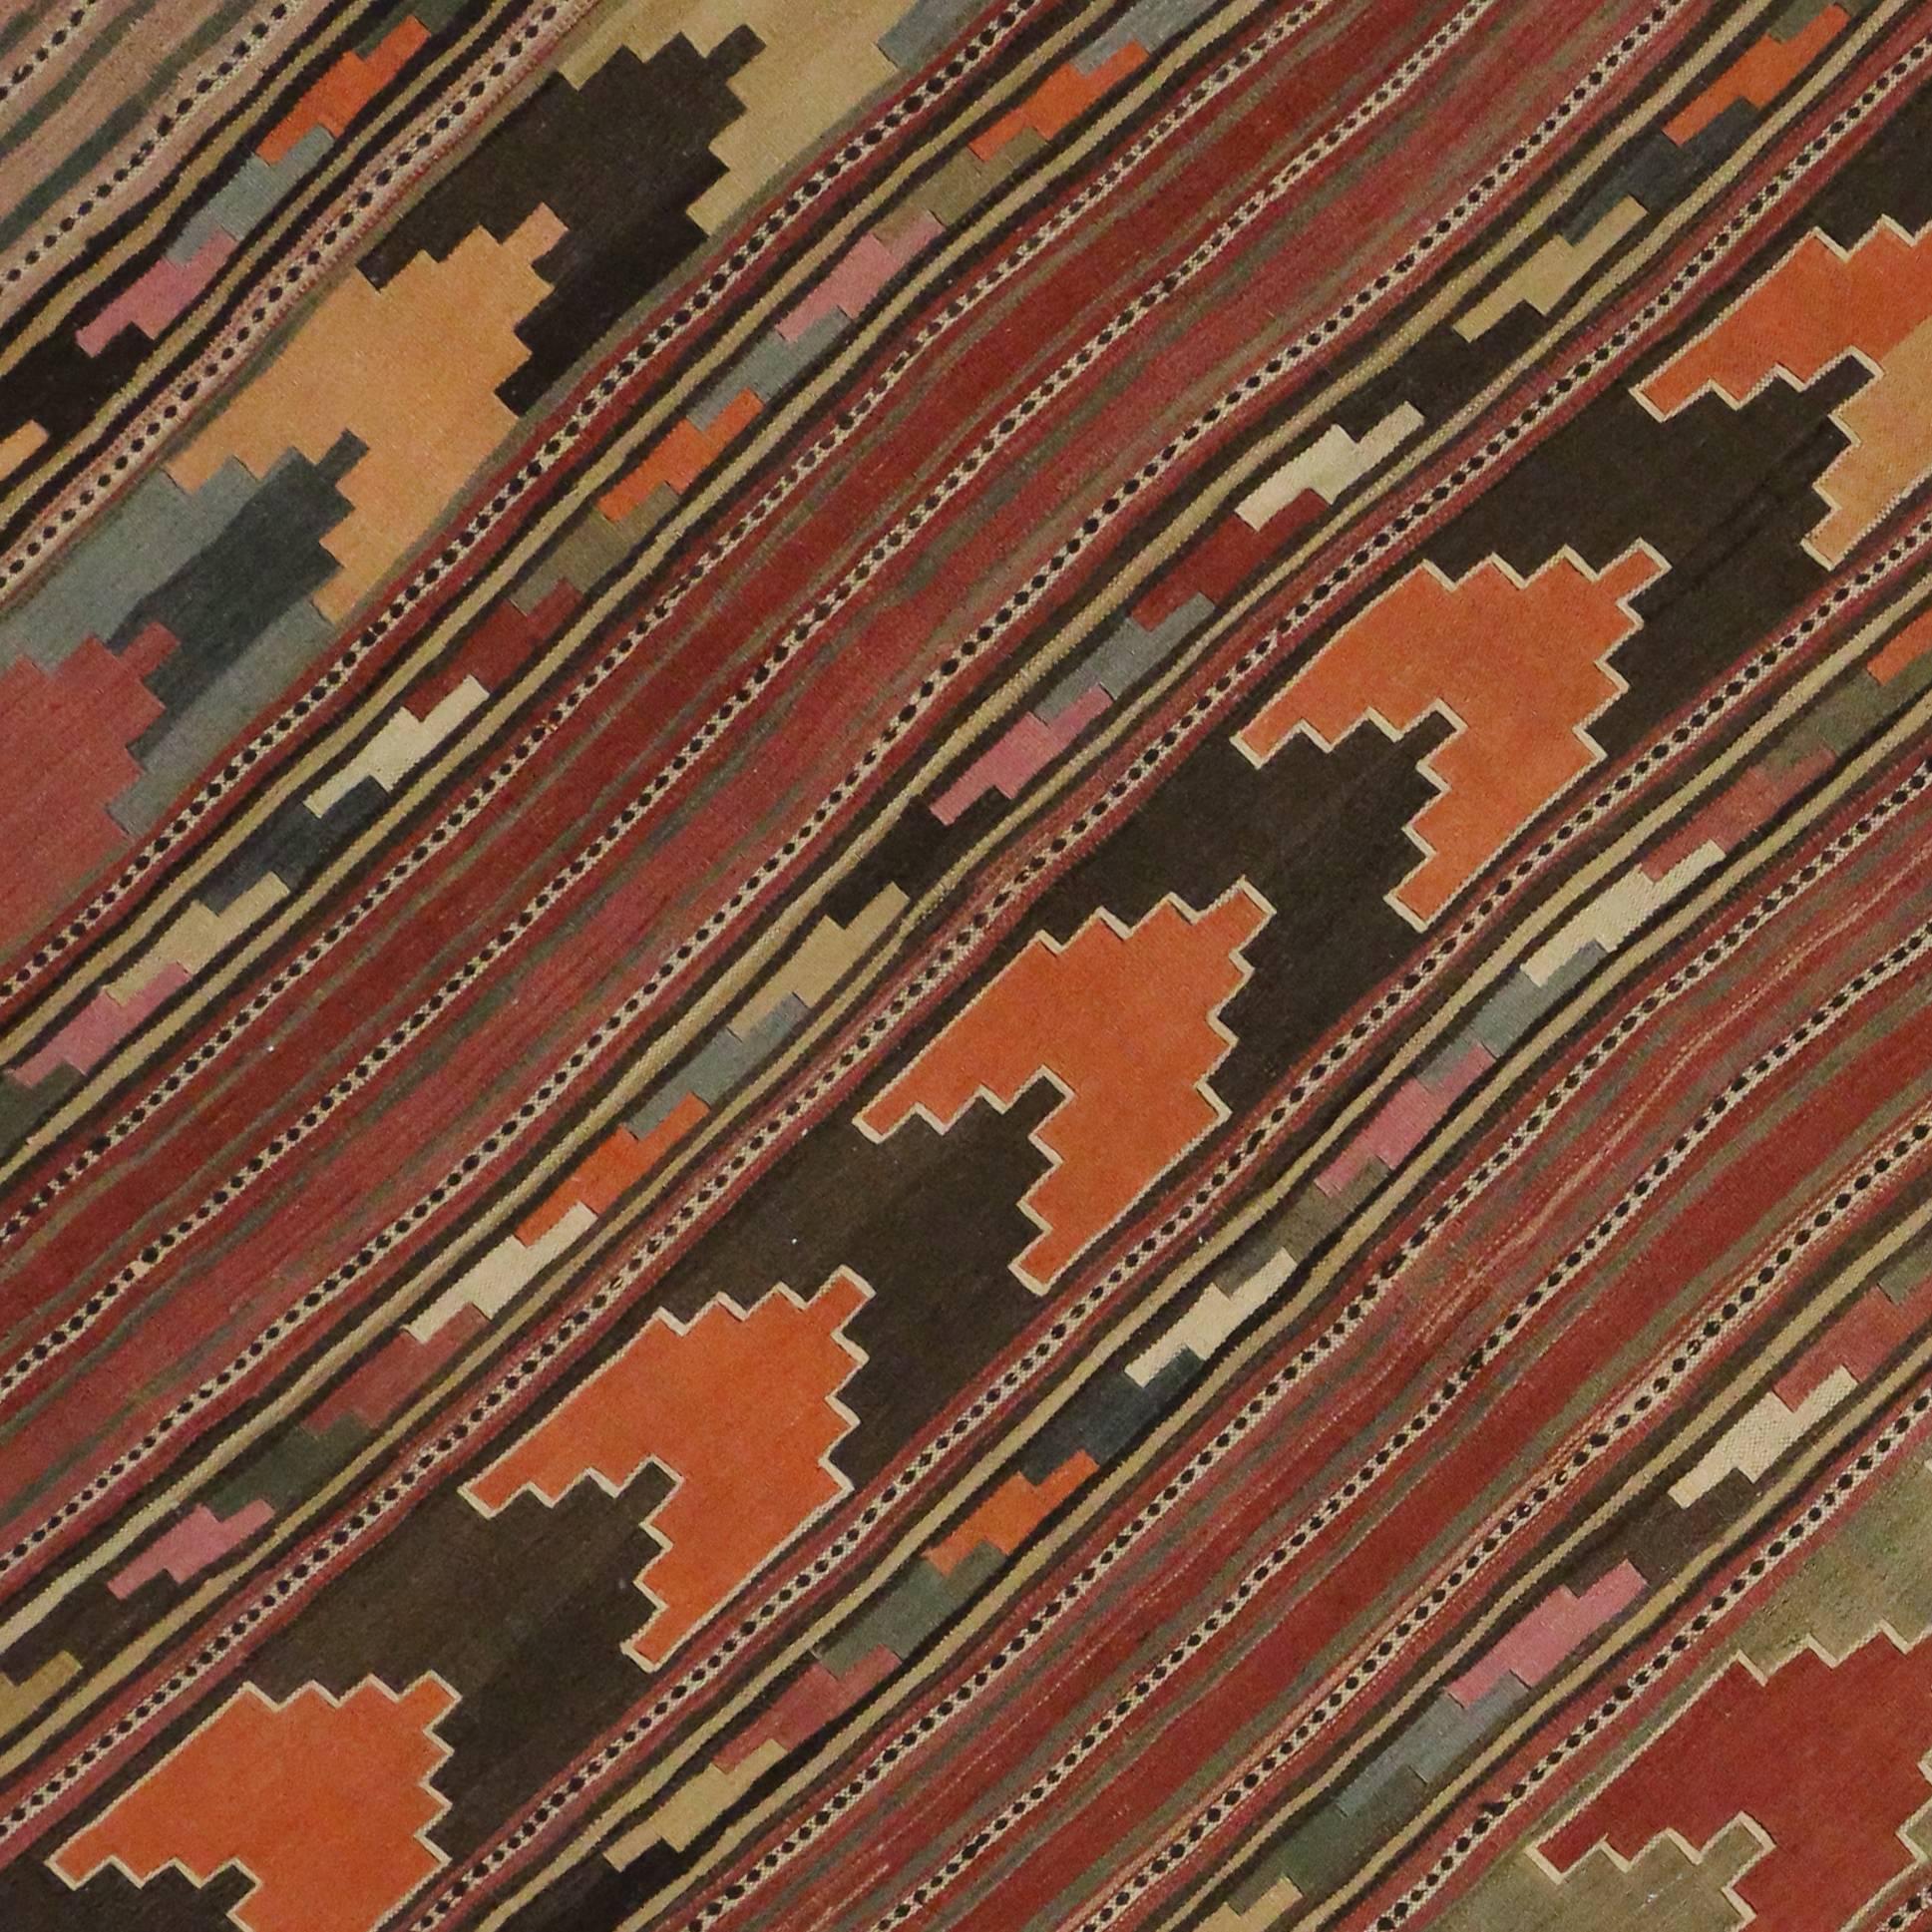 Hand-Woven Mid-Century Modern Vintage Turkish Kilim Rug with Boho Chic Style, Flatweave